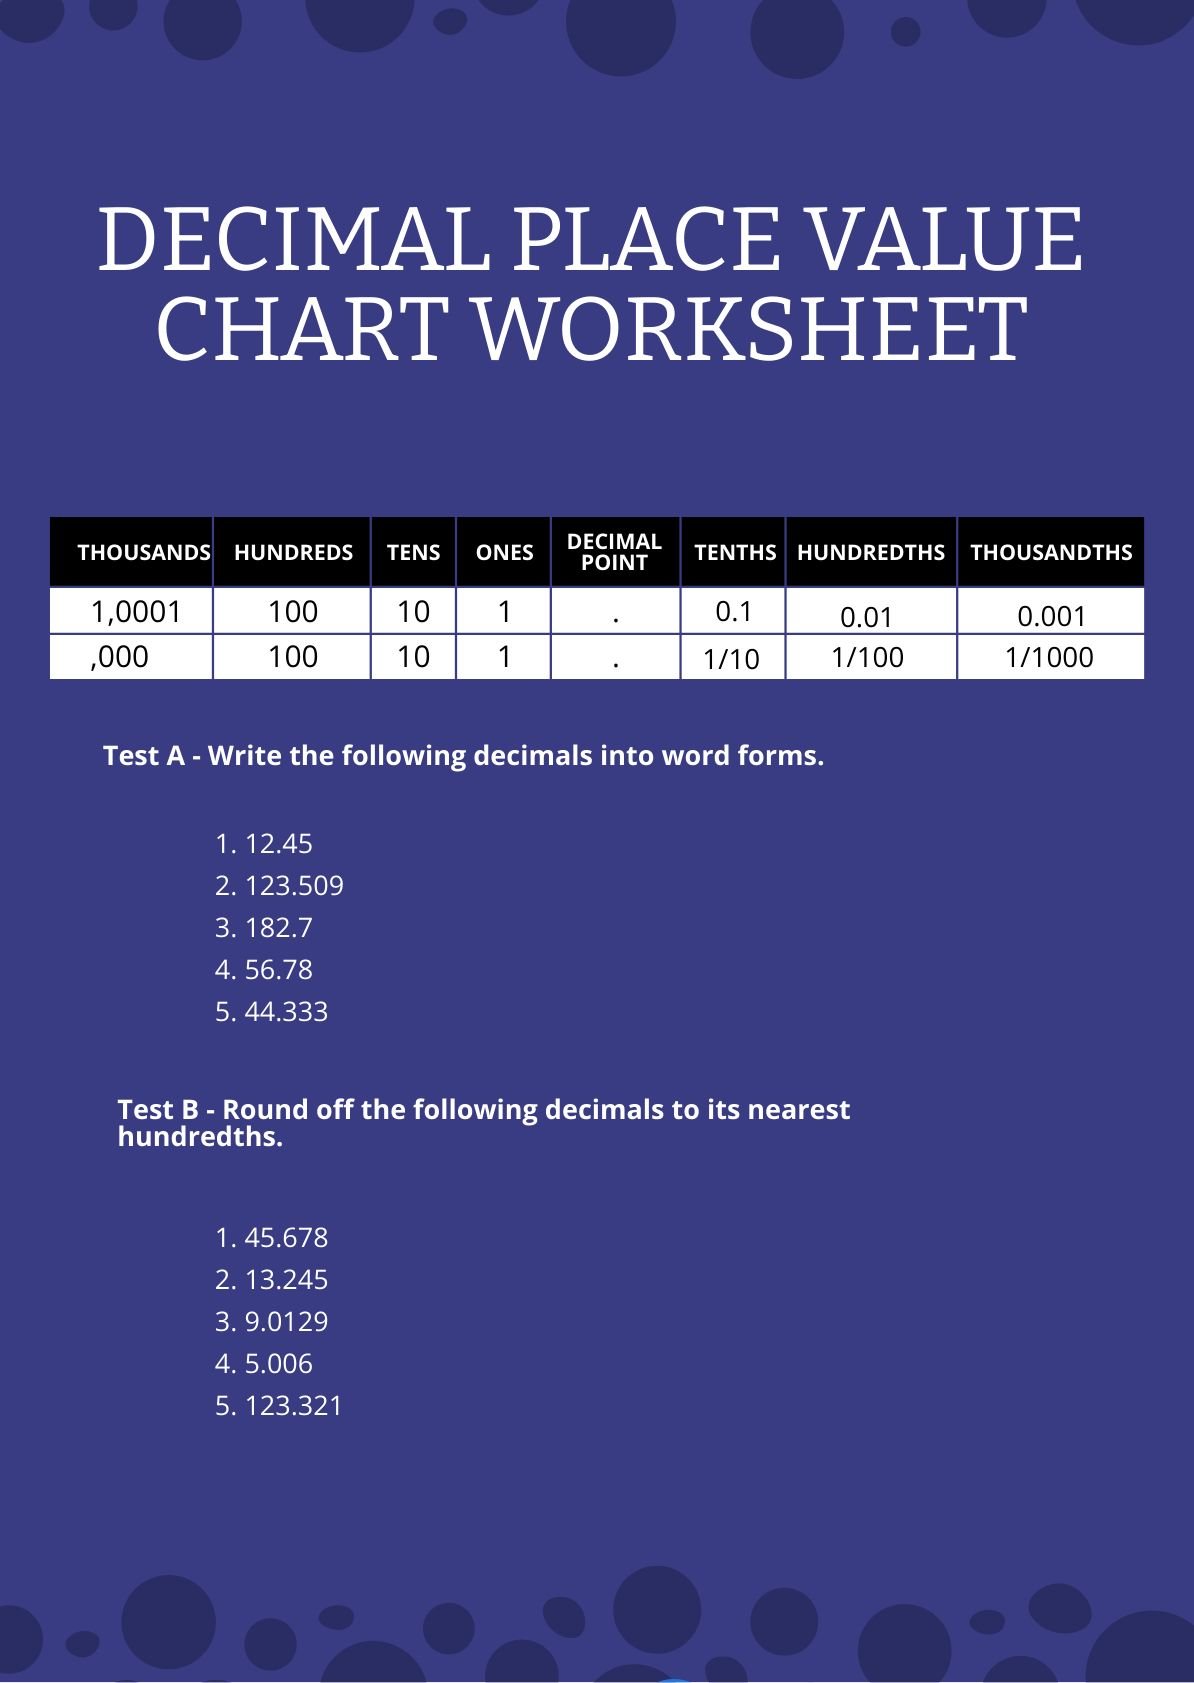 Decimal Place Value Chart Worksheet in PDF